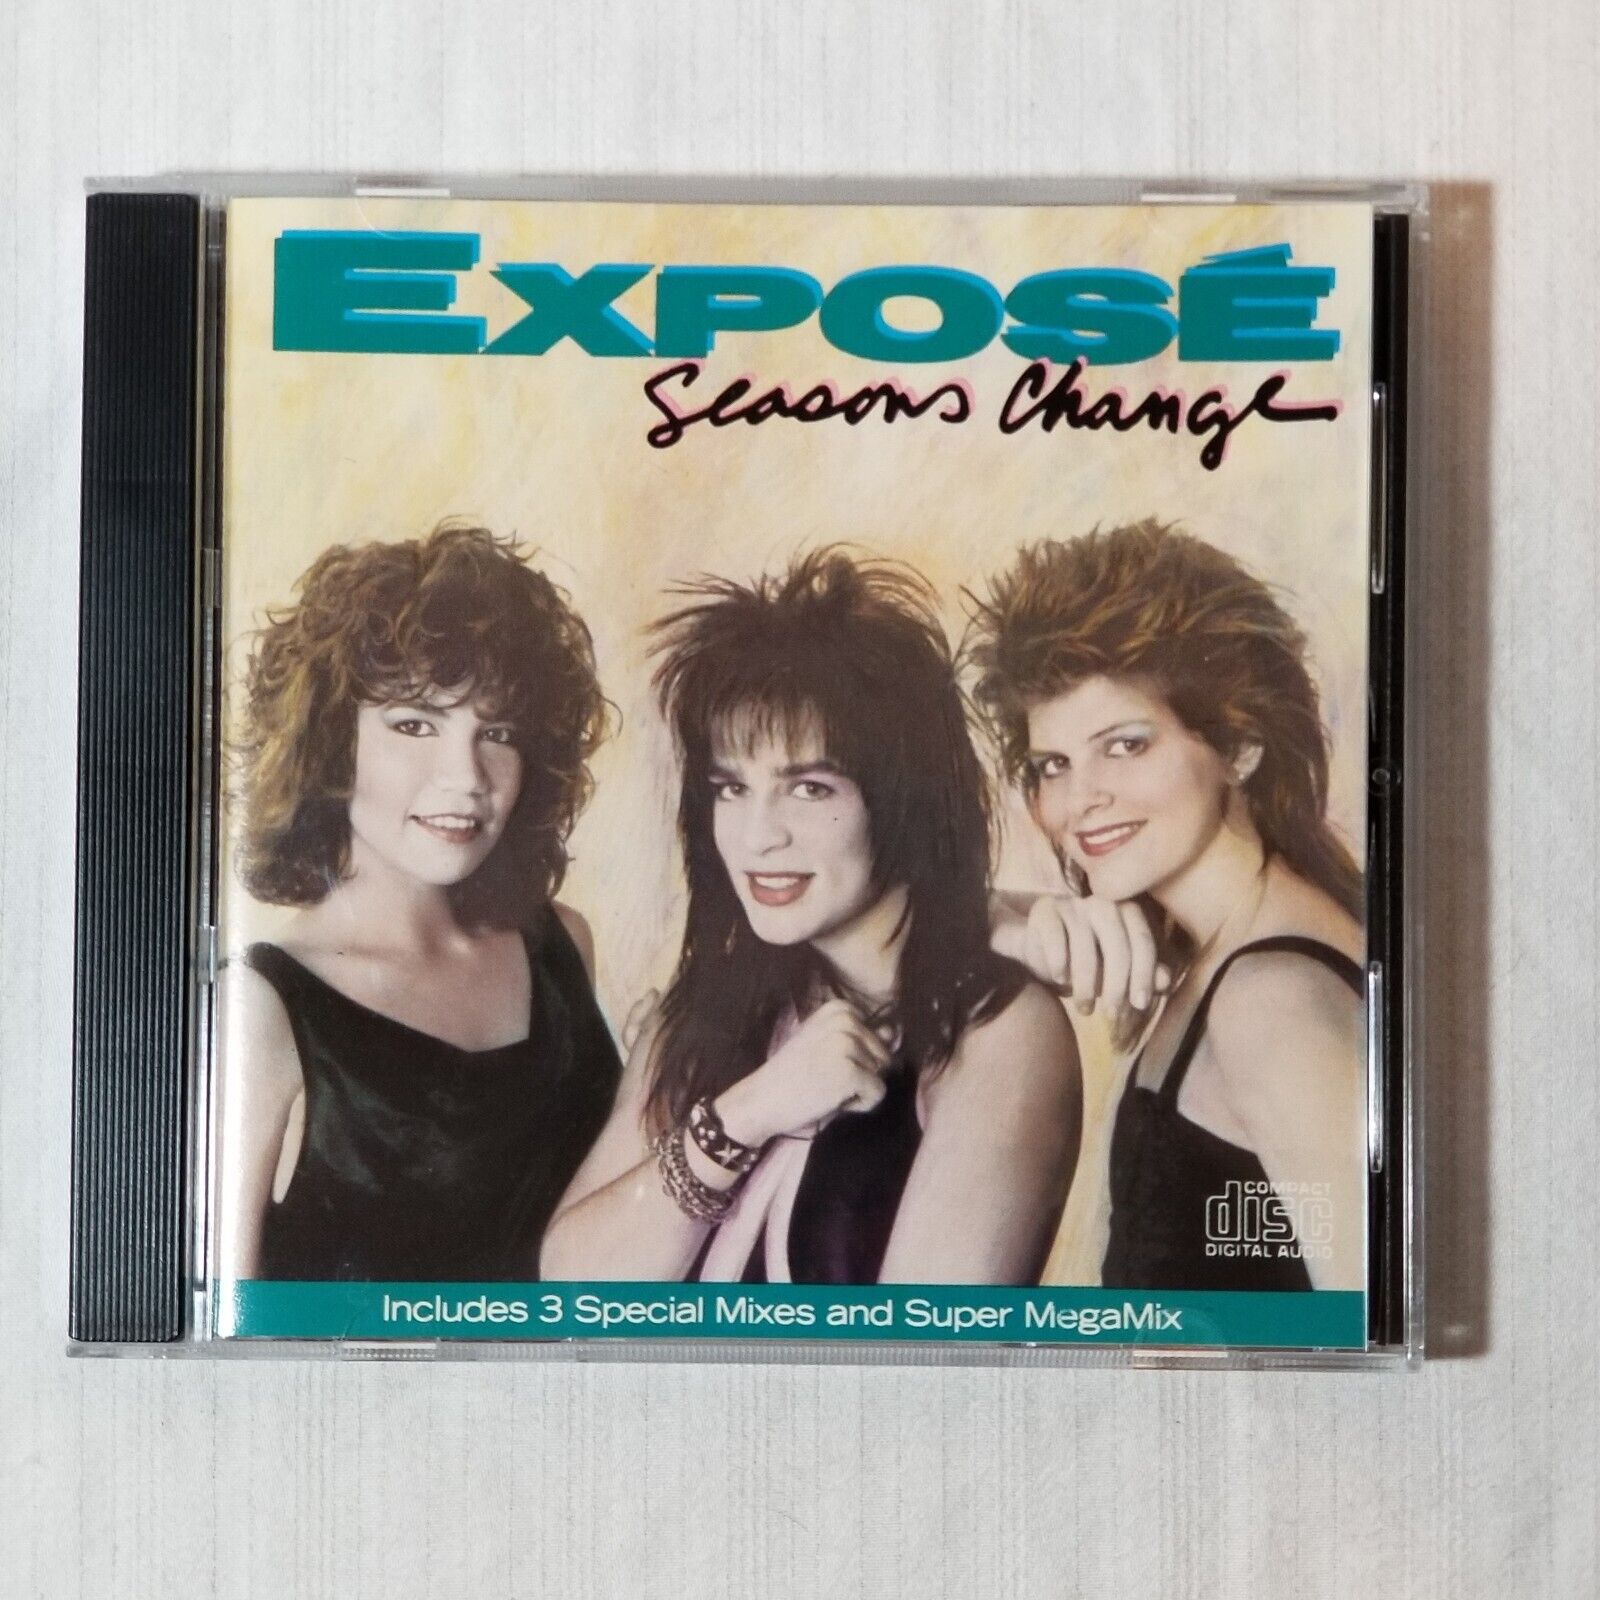 Exposé Seasons Change Promo CD Single Expose 4Tracks Mixes & Megamix Promotional